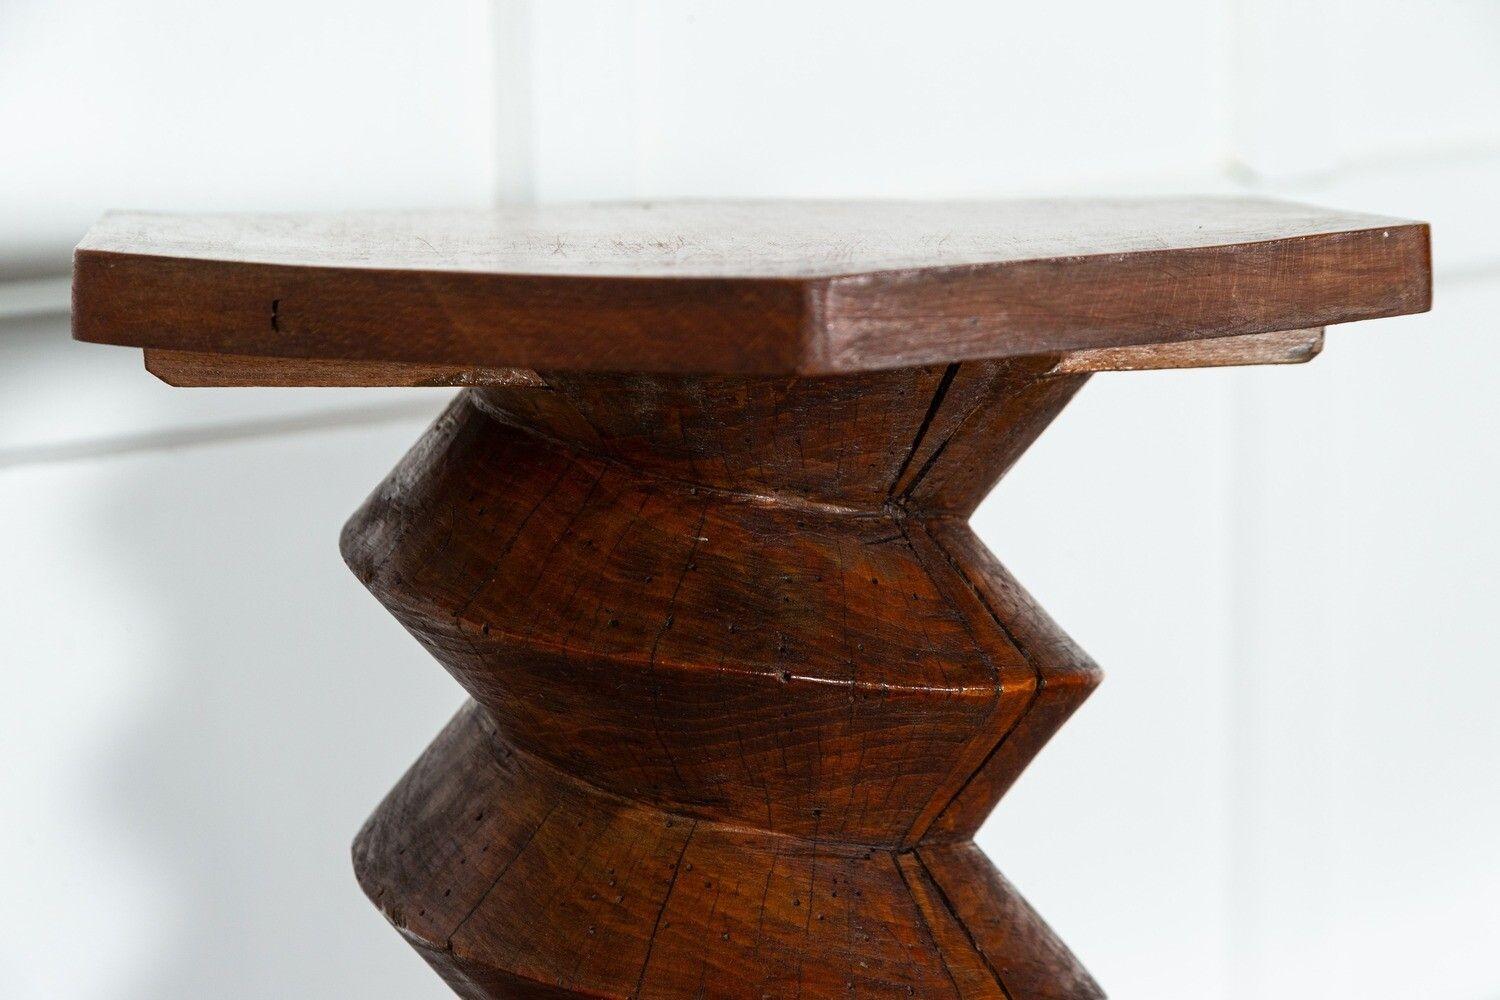 circa Mid 20thC
MidC French Elm Pedestal Table
sku 1605C
W34 x D34 x H45 cm